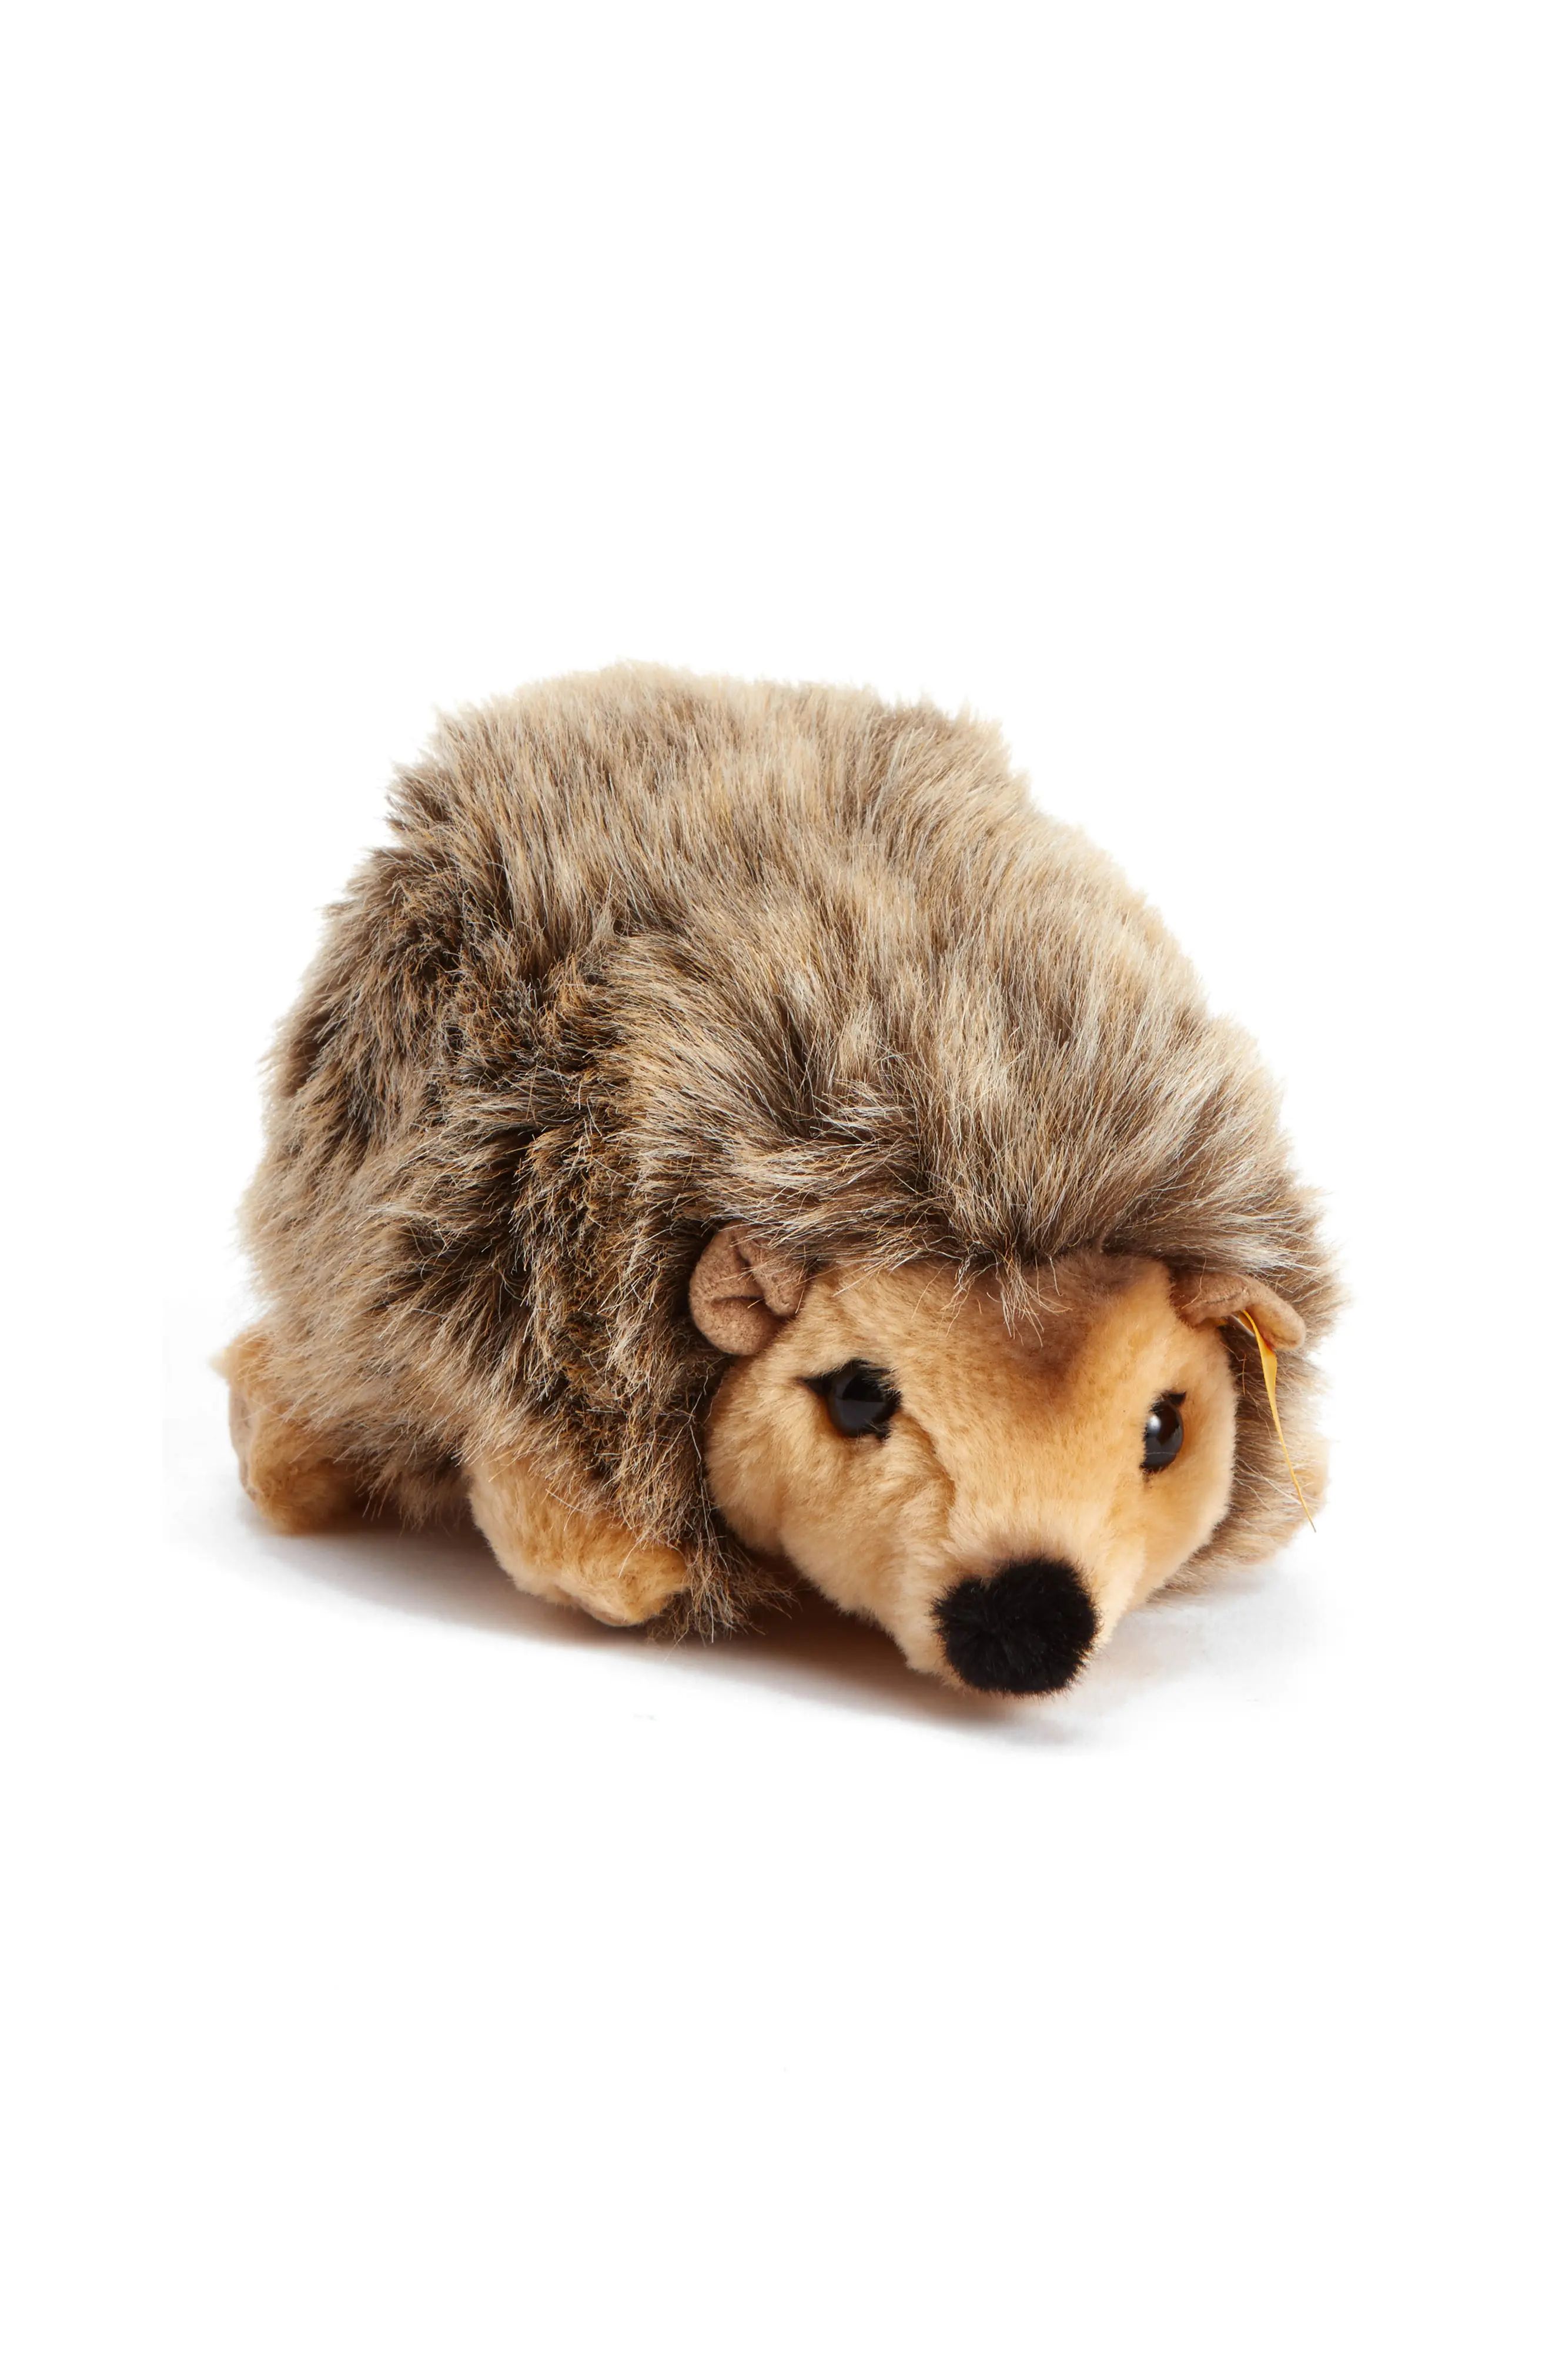 Joggi Hedgehog Stuffed Animal | Nordstrom